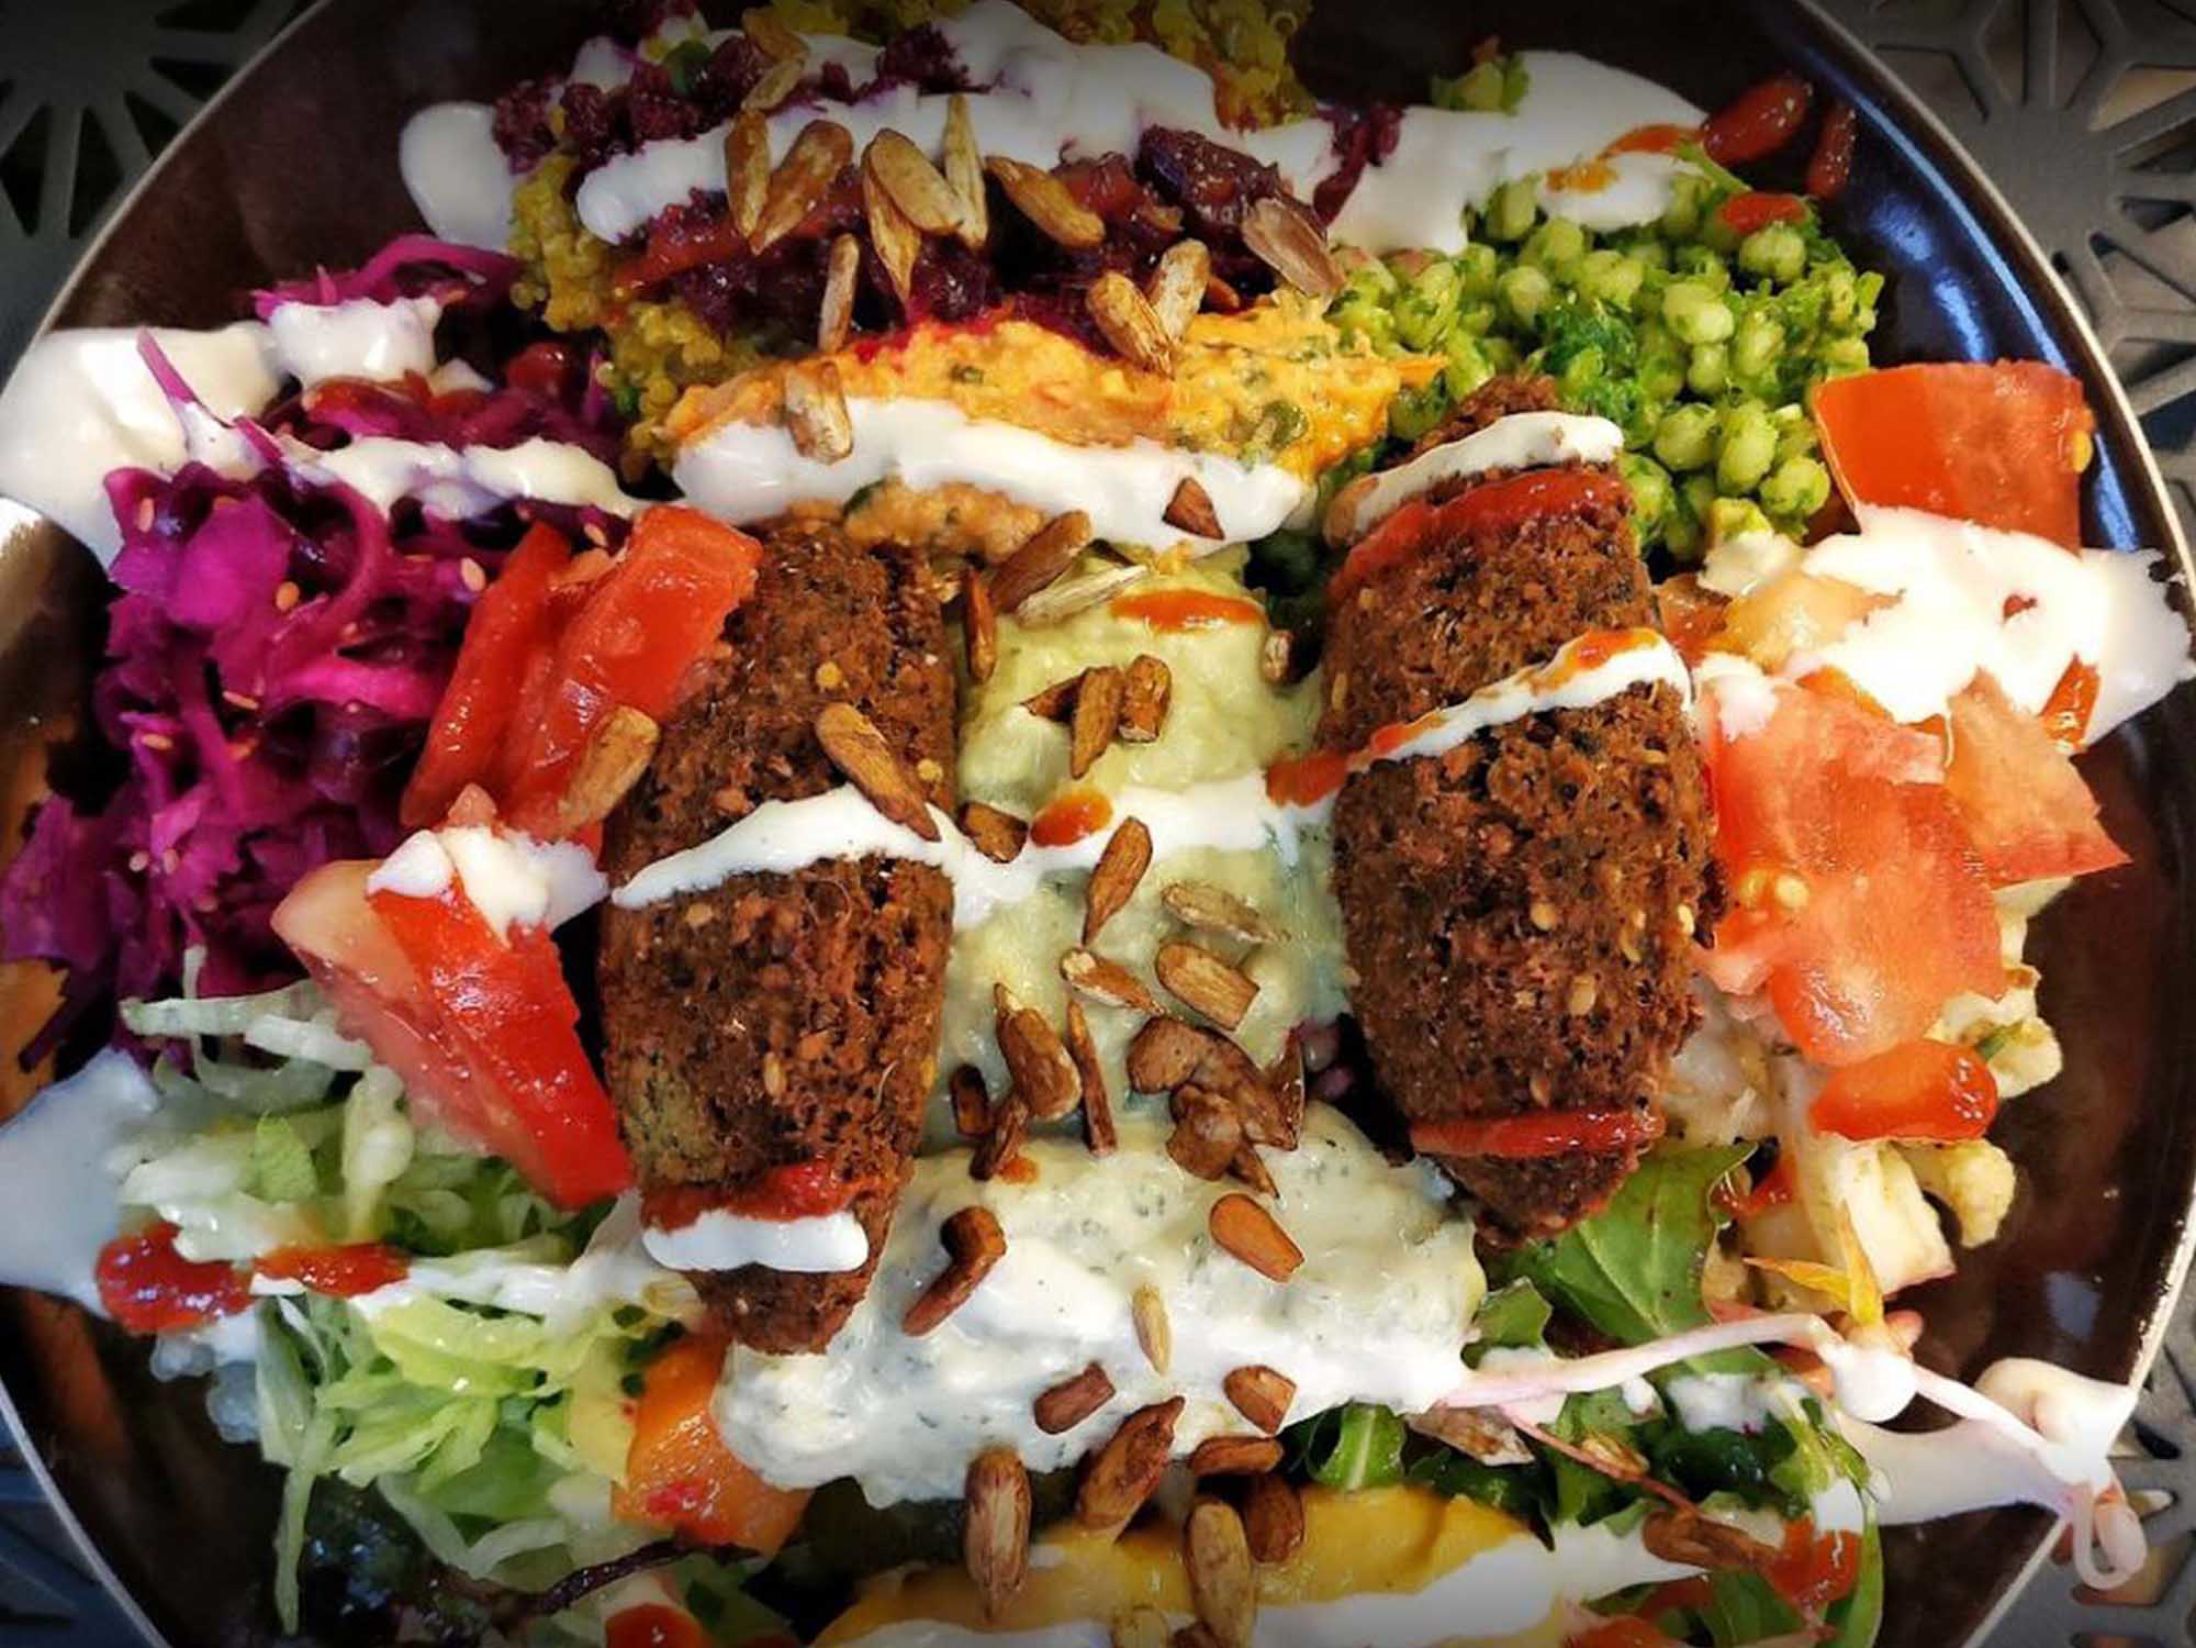 Best Vegan Restaurants in Brighton - Smorl's Houmous Falafel & Salad Bar